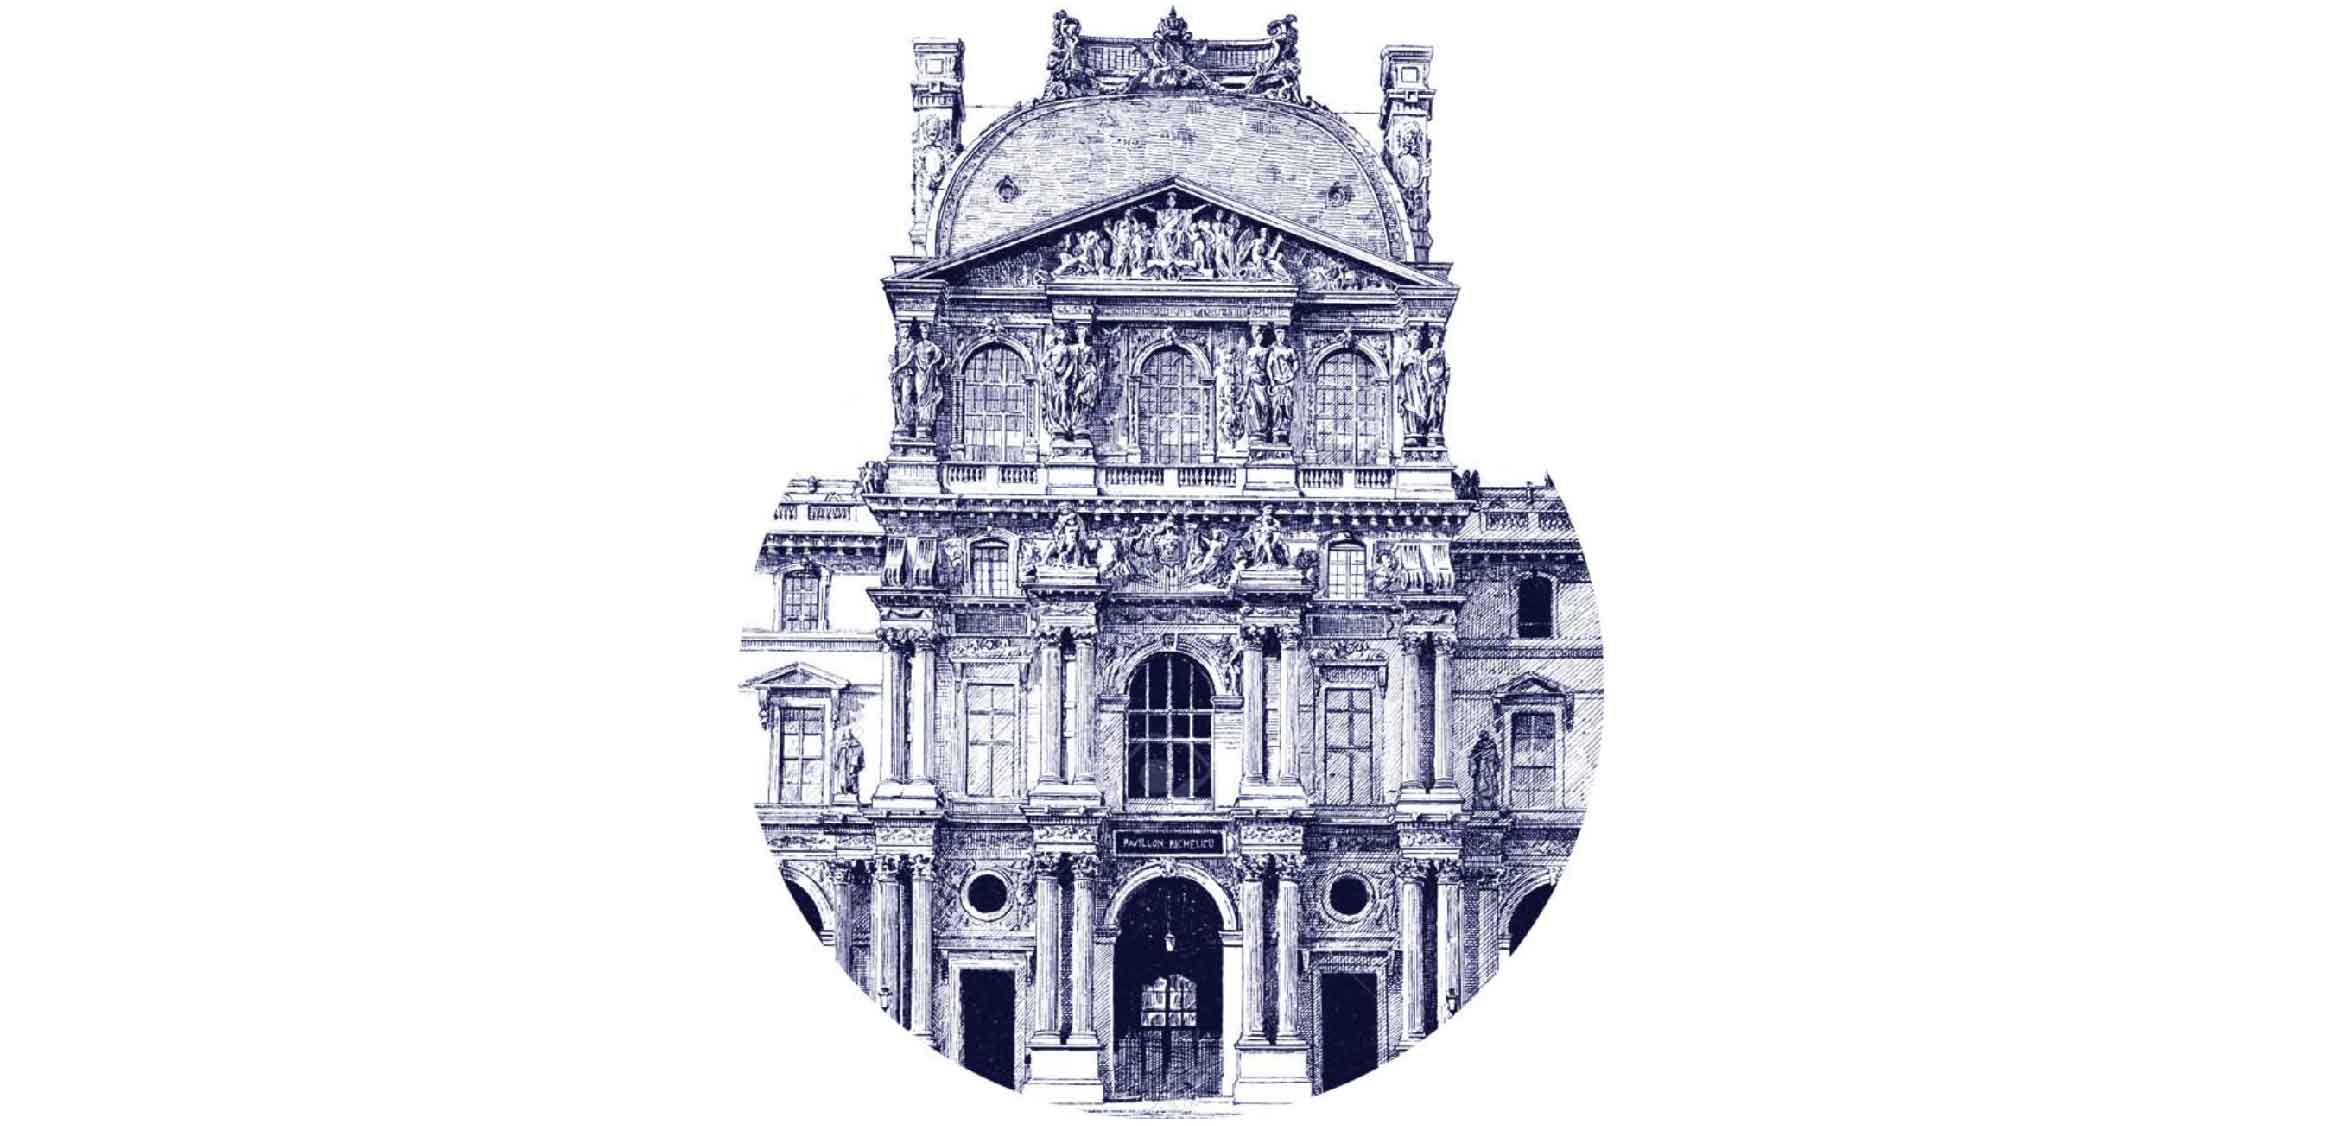 Circles_Louvre_Palace_Chaumet